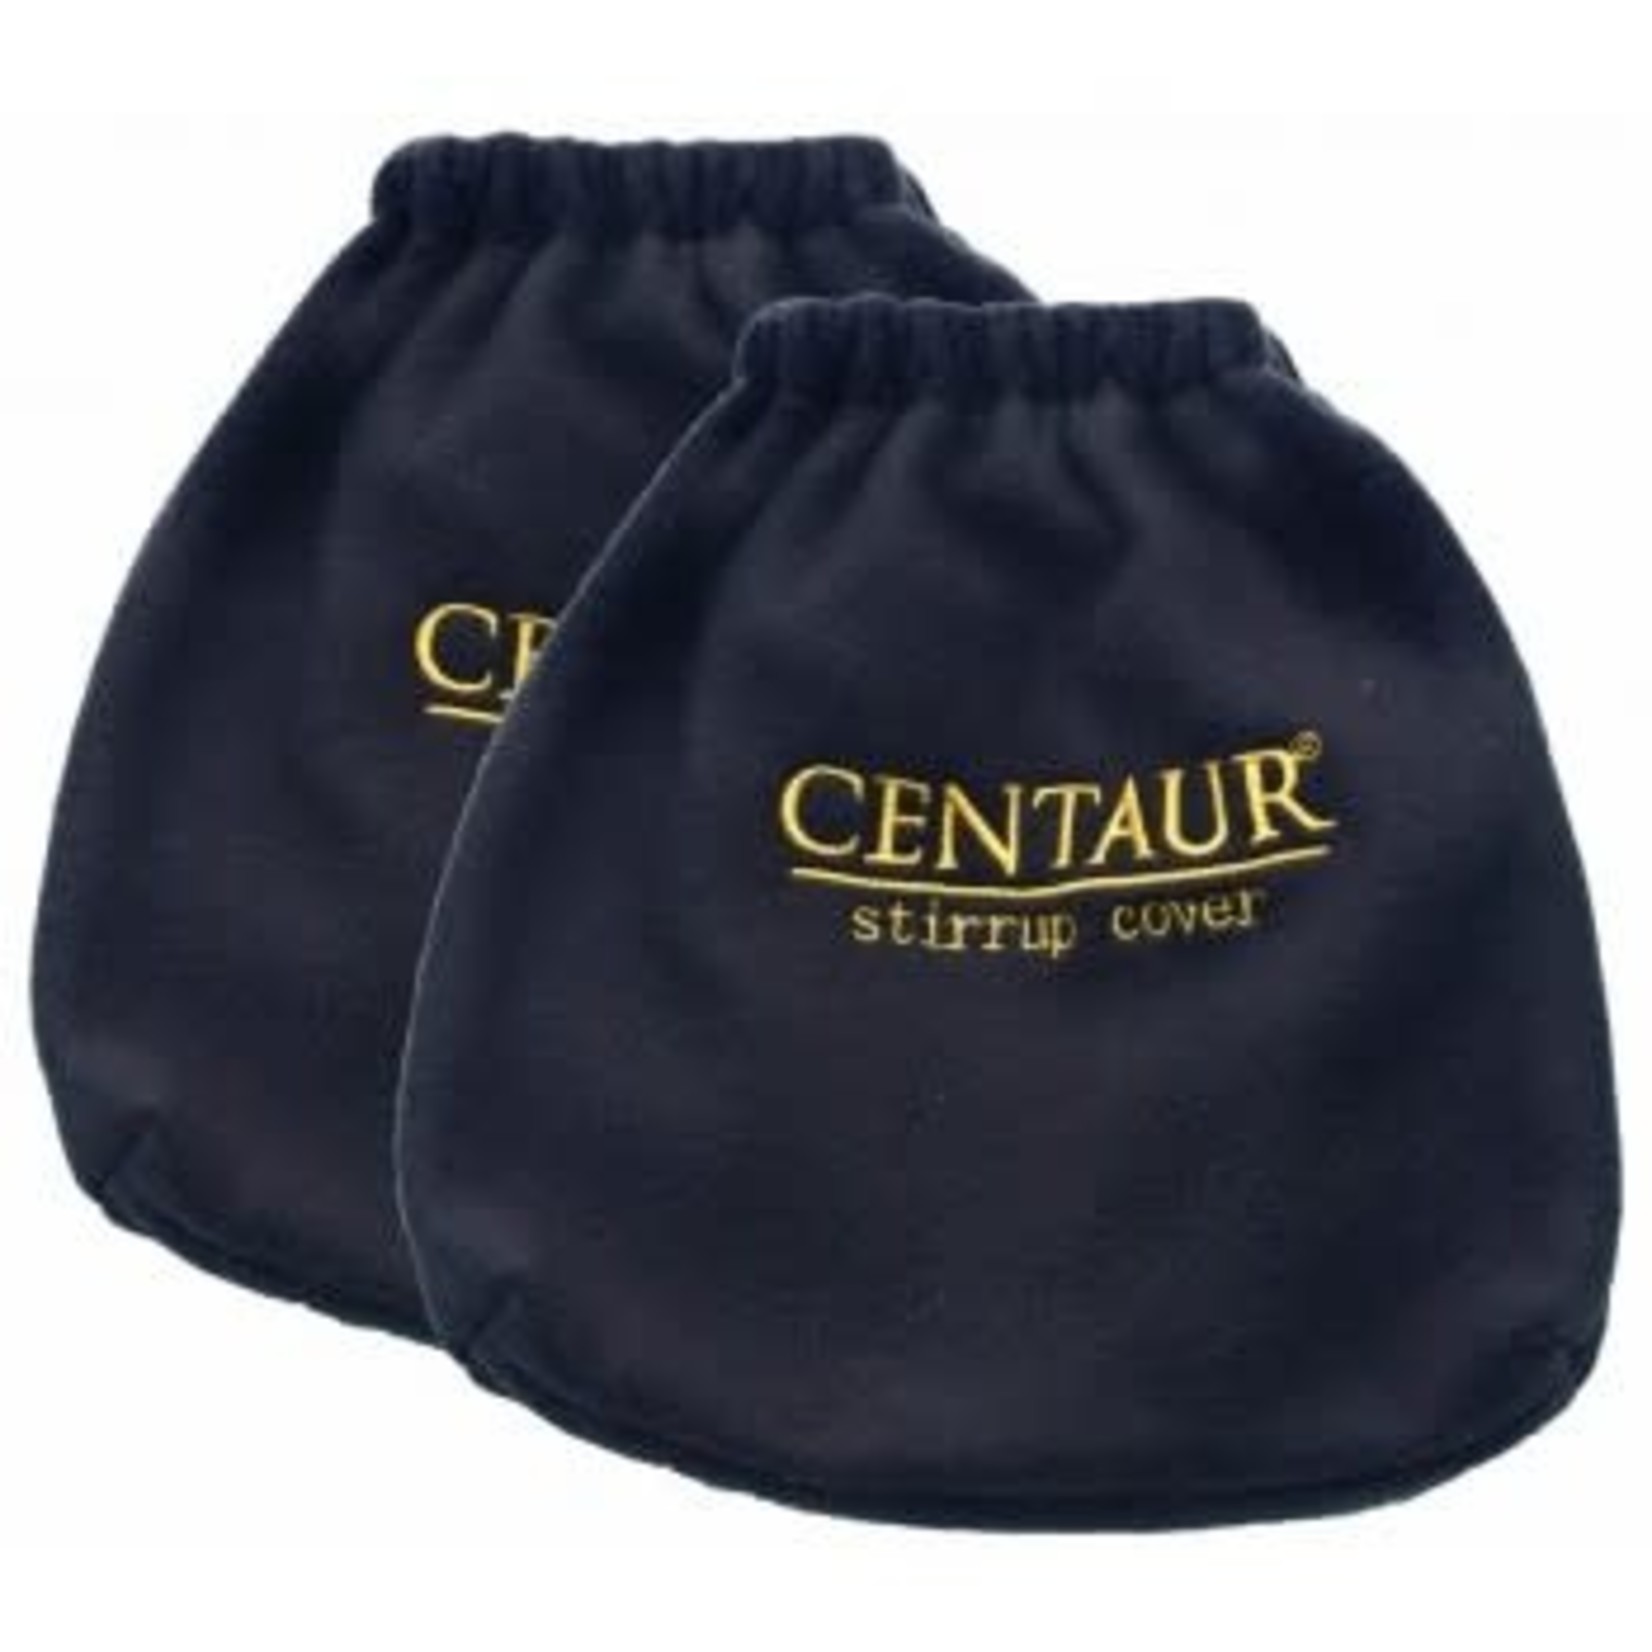 Centaur Stirrup Covers